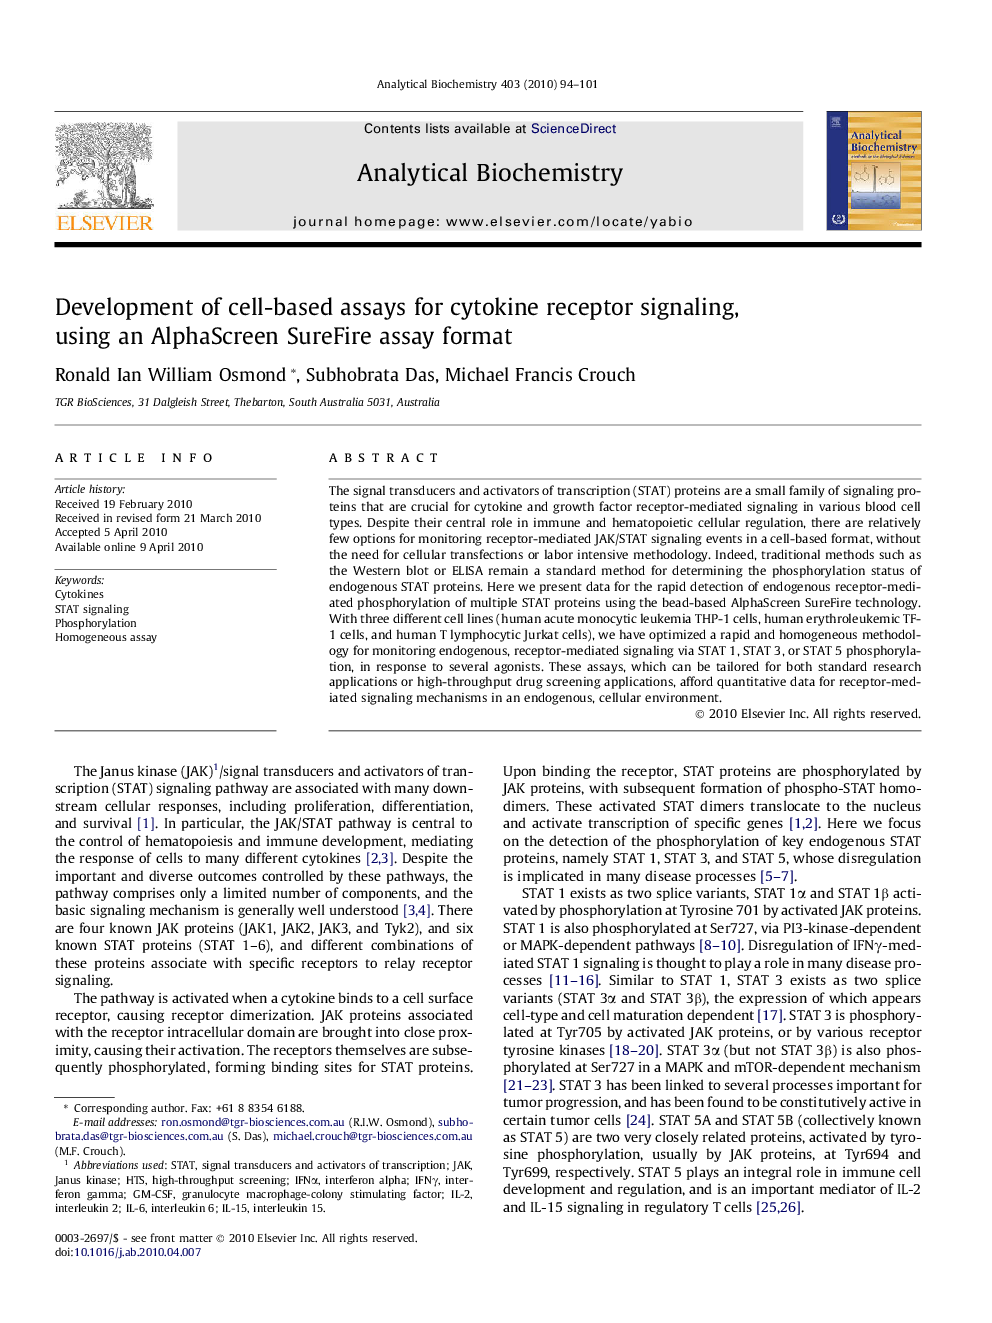 Development of cell-based assays for cytokine receptor signaling, using an AlphaScreen SureFire assay format